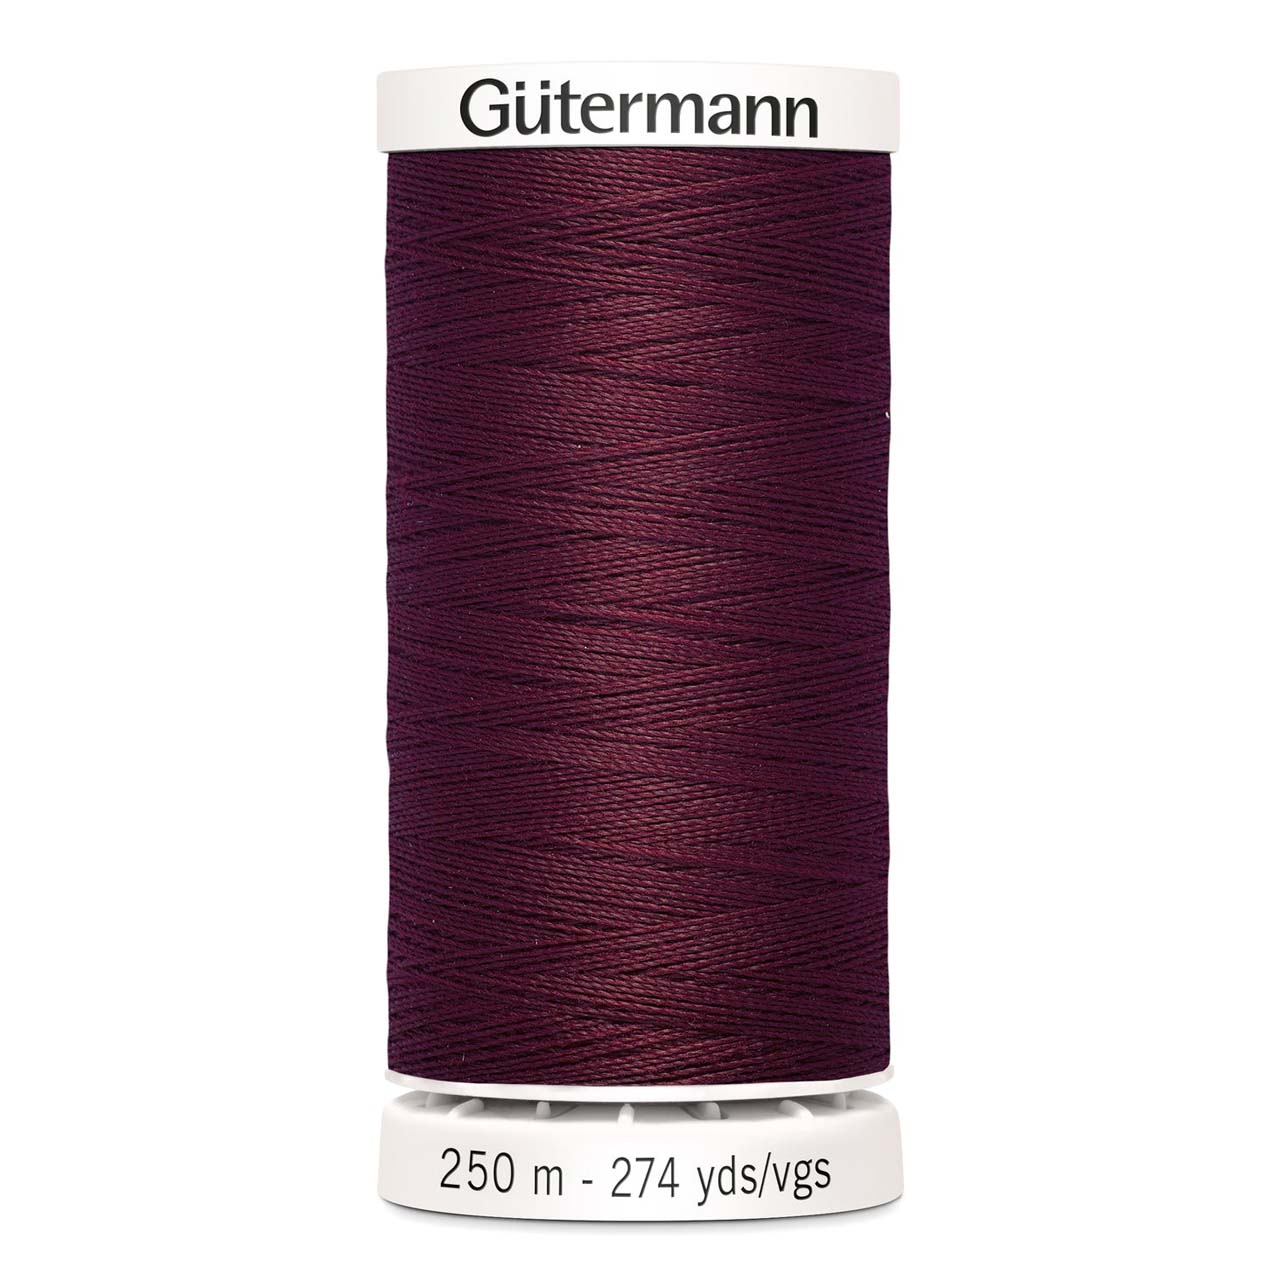 Gutermann thread 369 sewing thread 250 metres